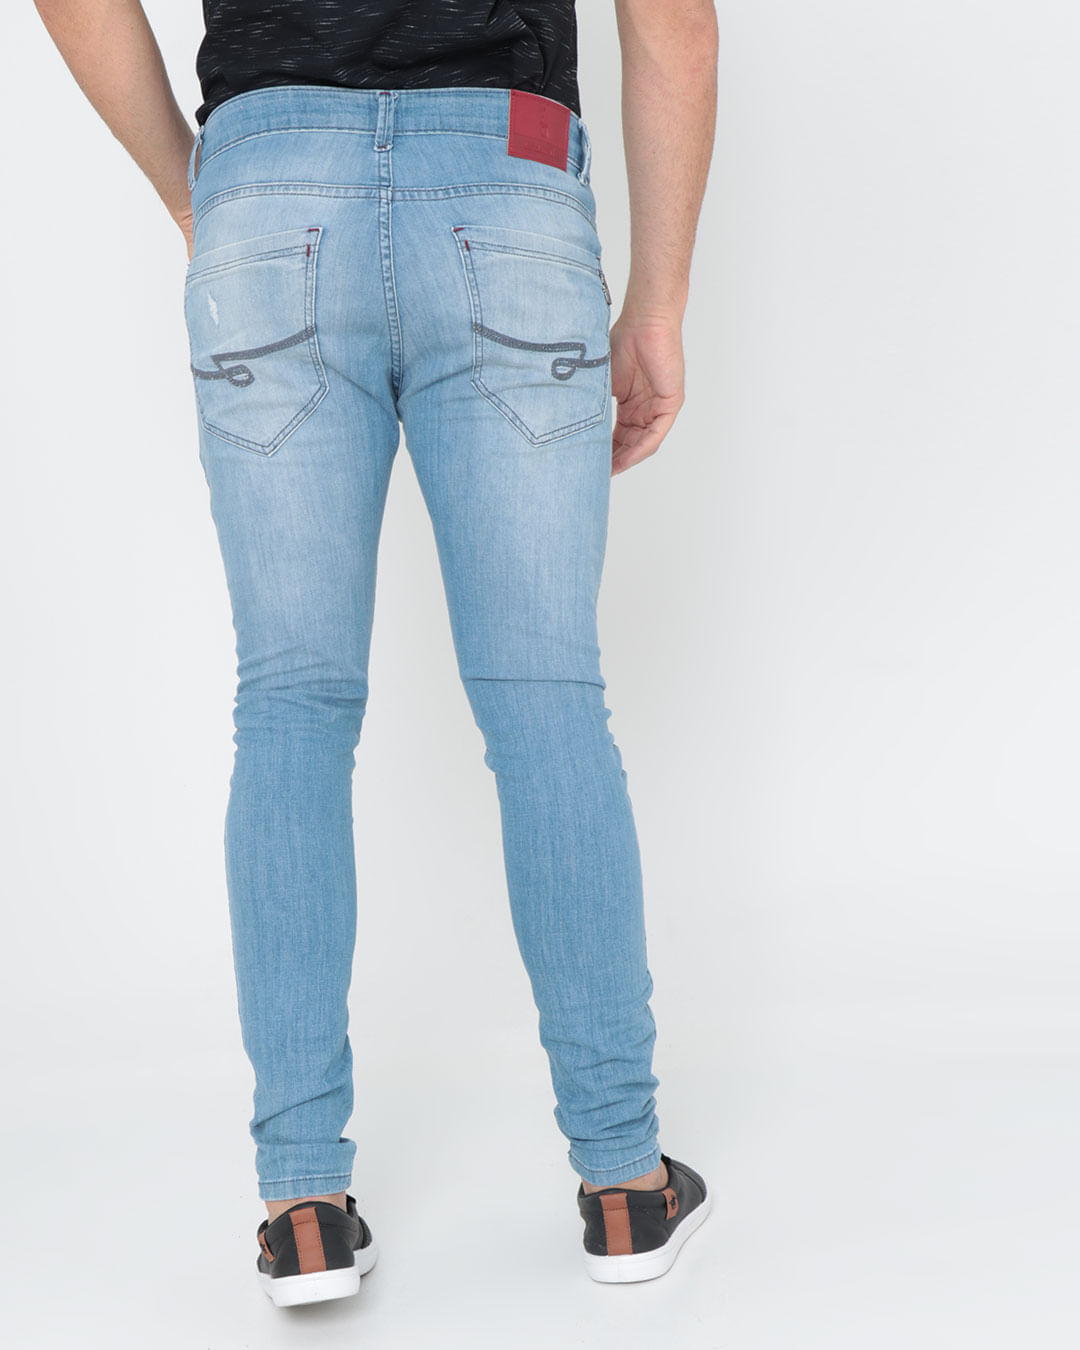 Calca-Jeans-Masculina-Skinny-Destroyed-Azul-Claro